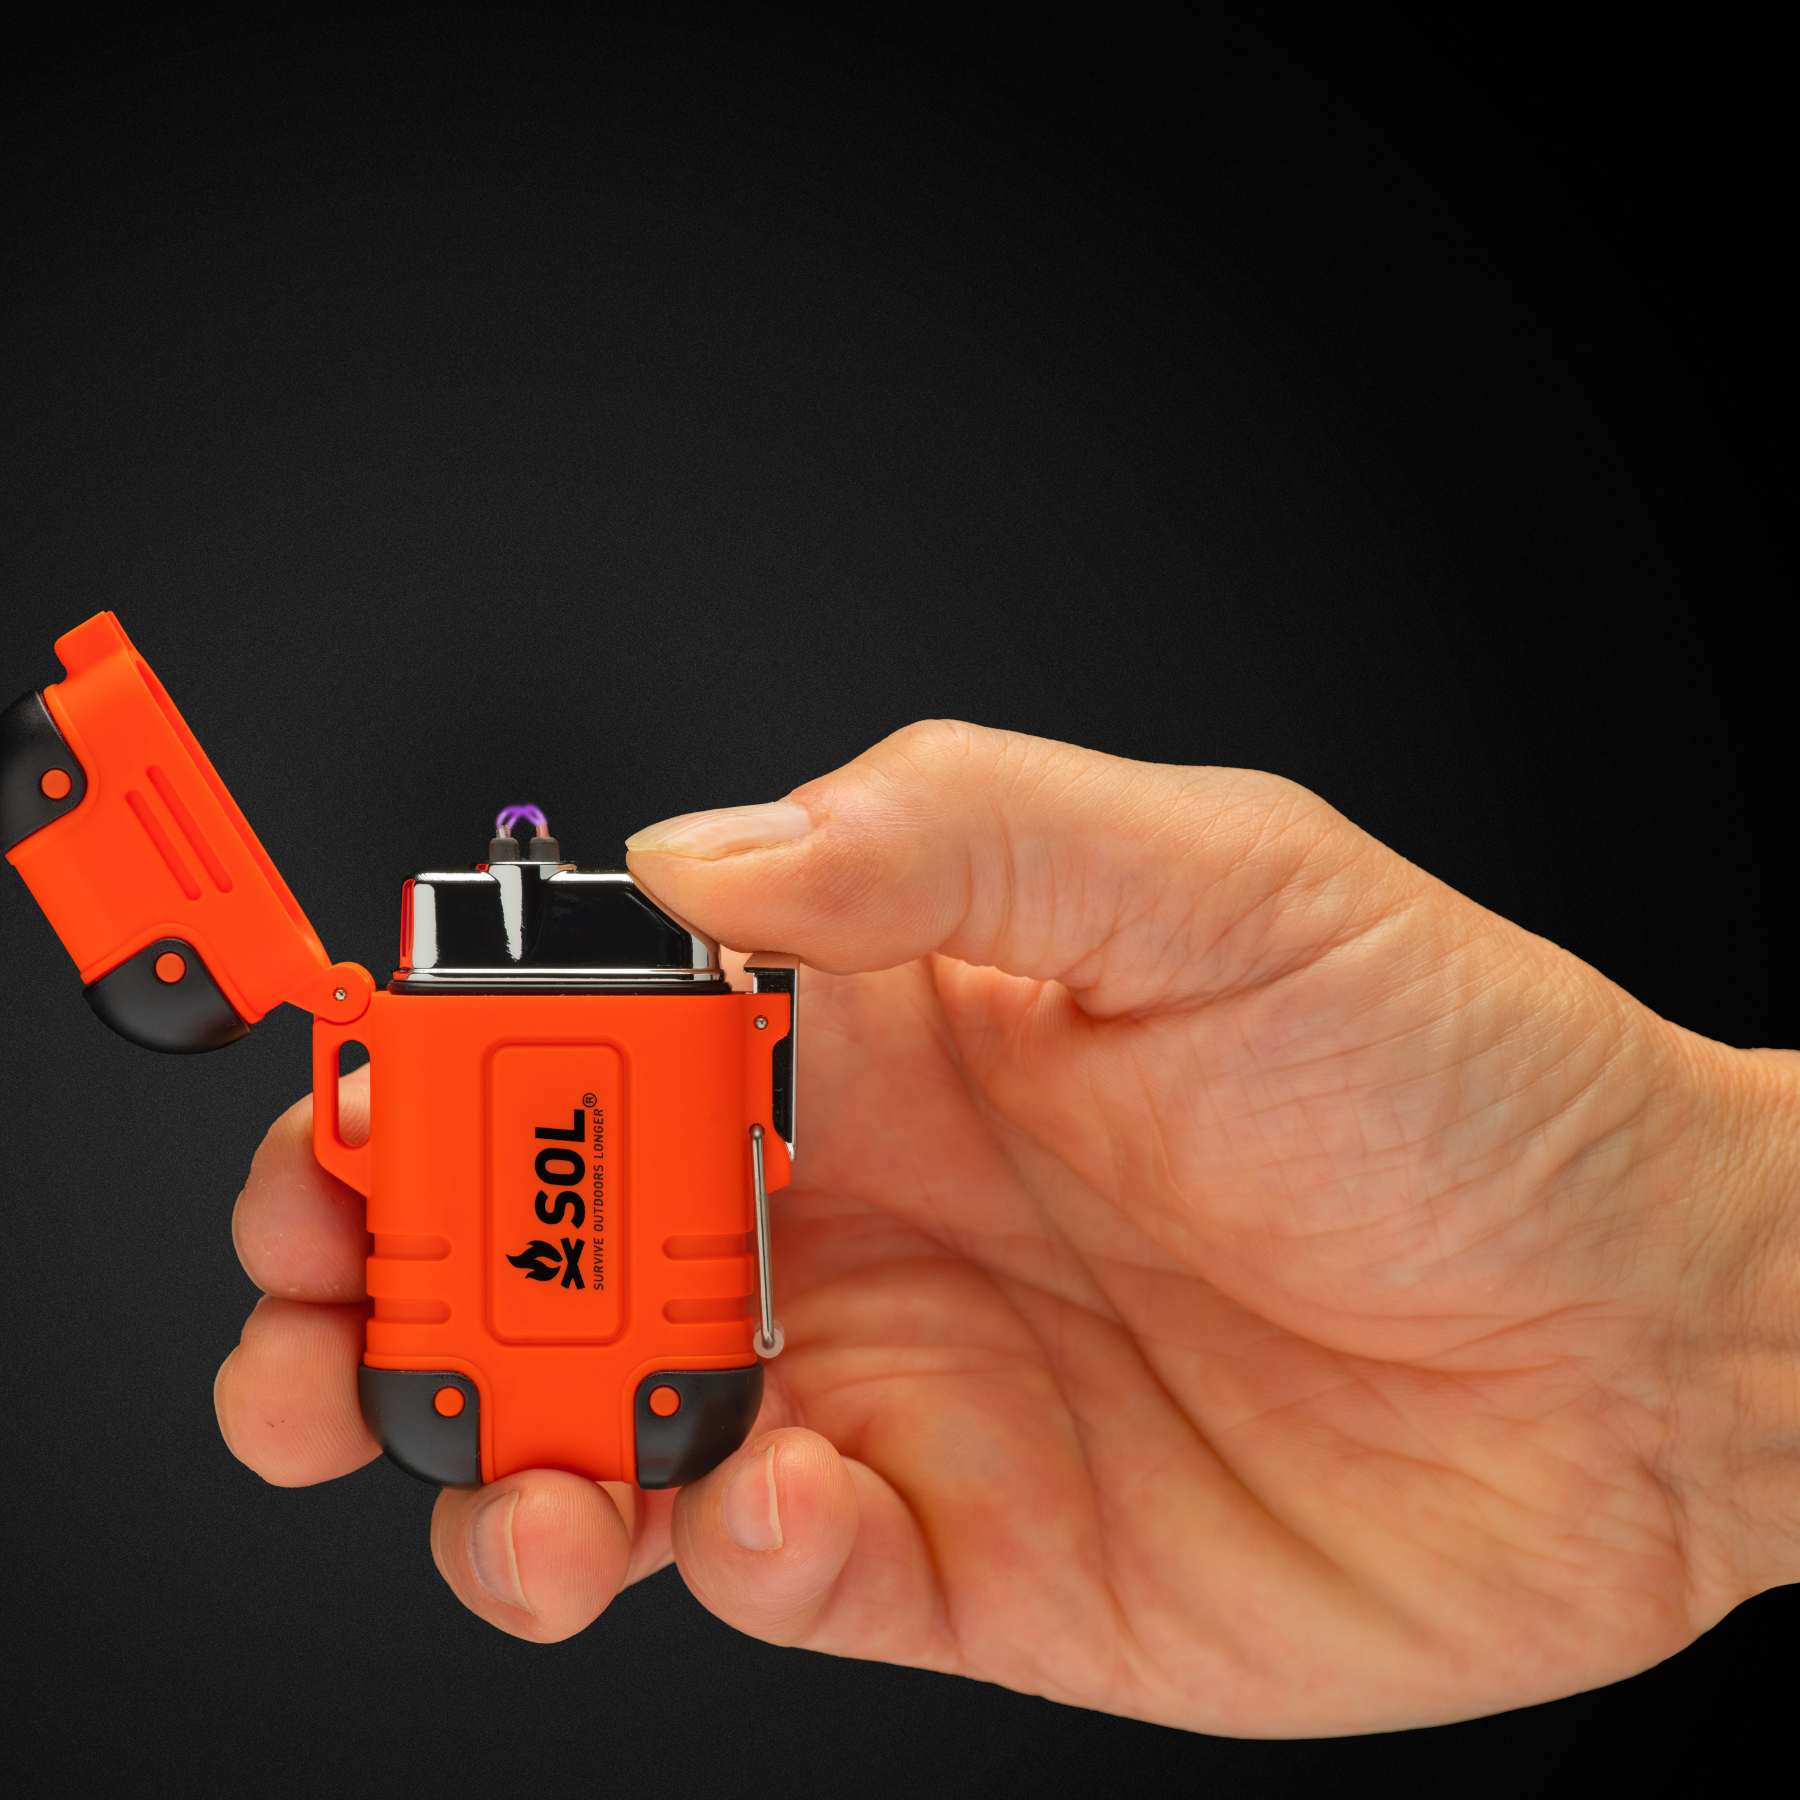 Orange and Black SOL Plasma Dual Arc Lighter in Hand Lit Against Black Background